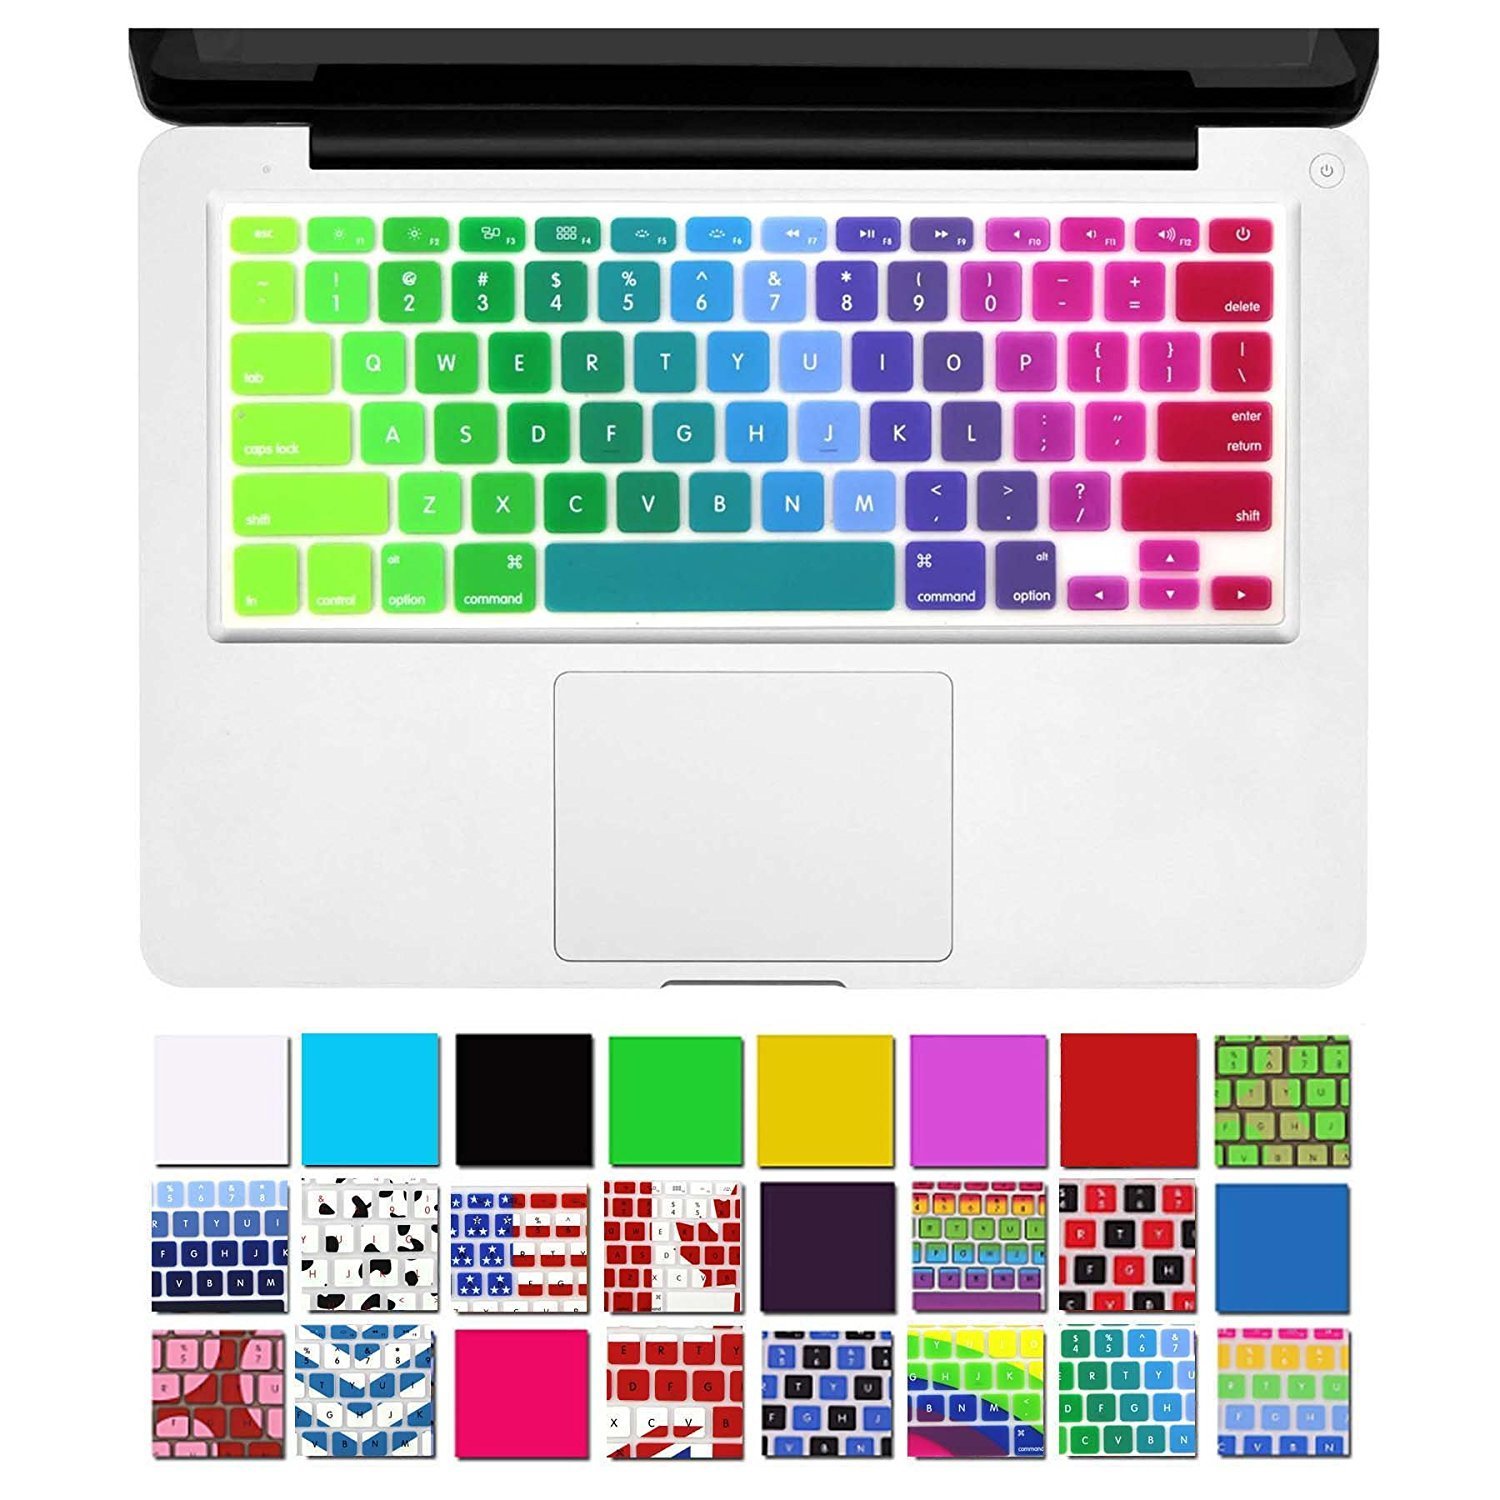 DHZ Rainbow Macbook Pro Keyboard Cover .jpg